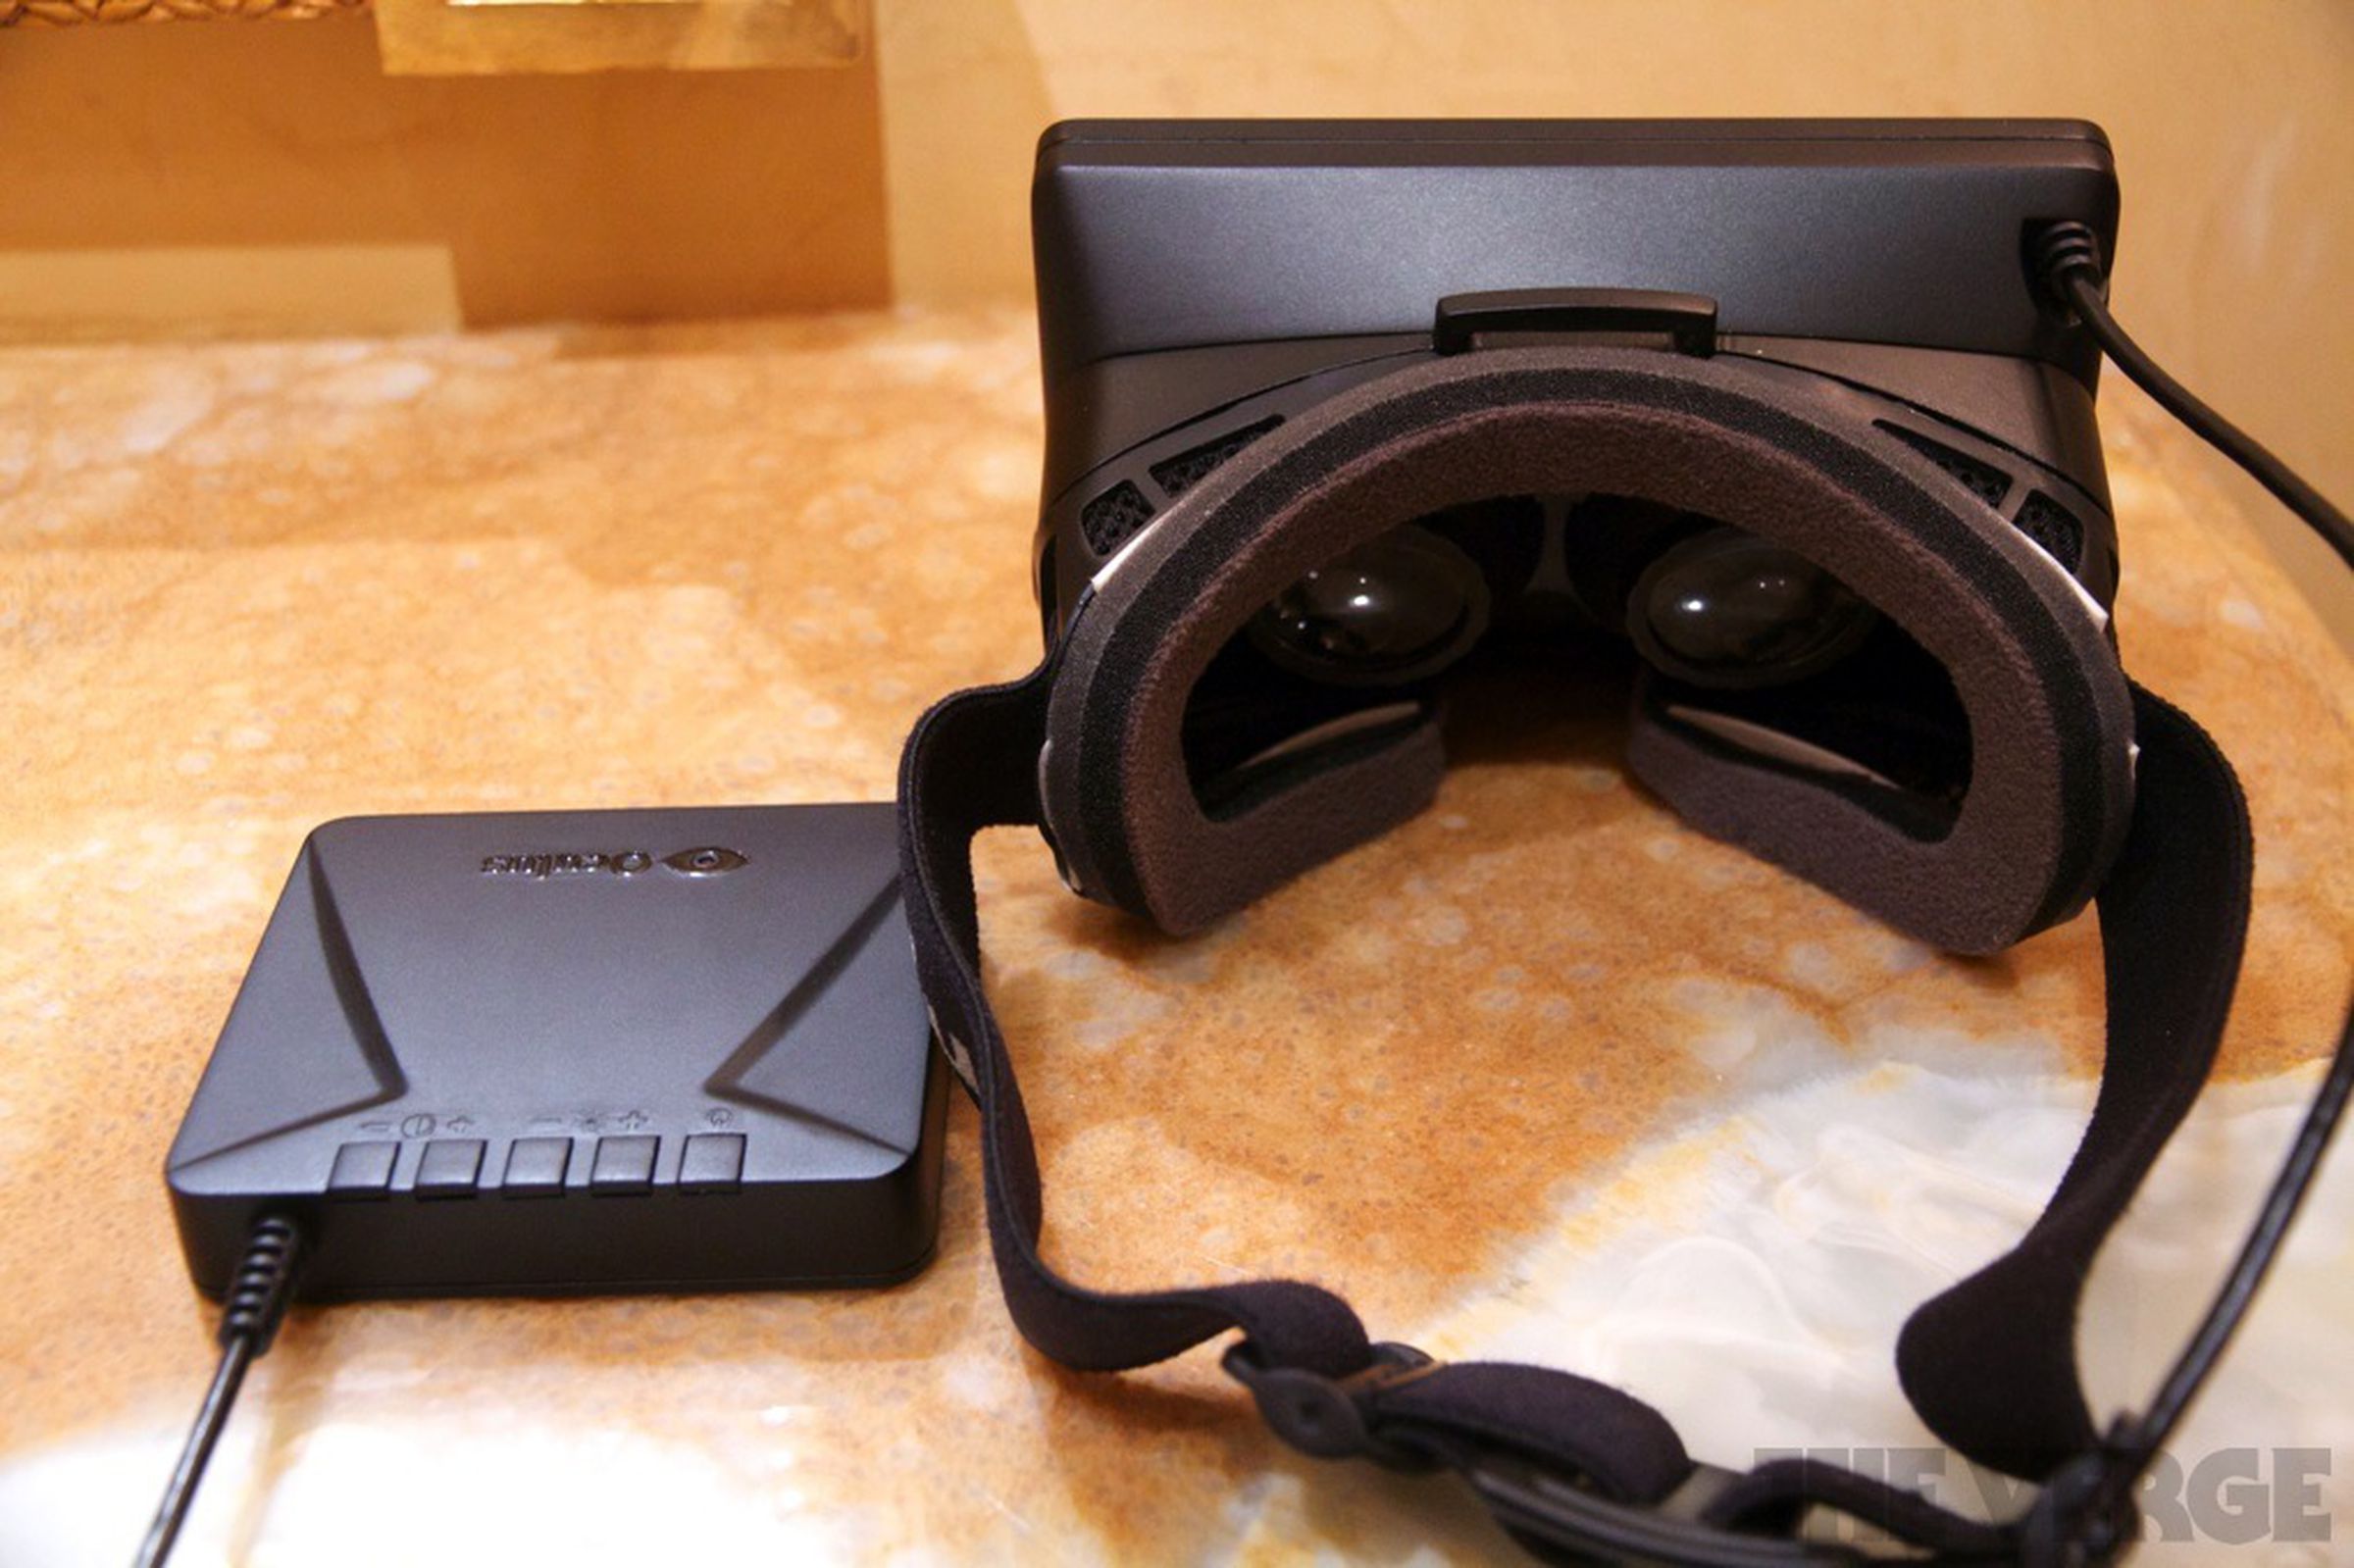 Oculus Rift virtual reality headset hands-on photos